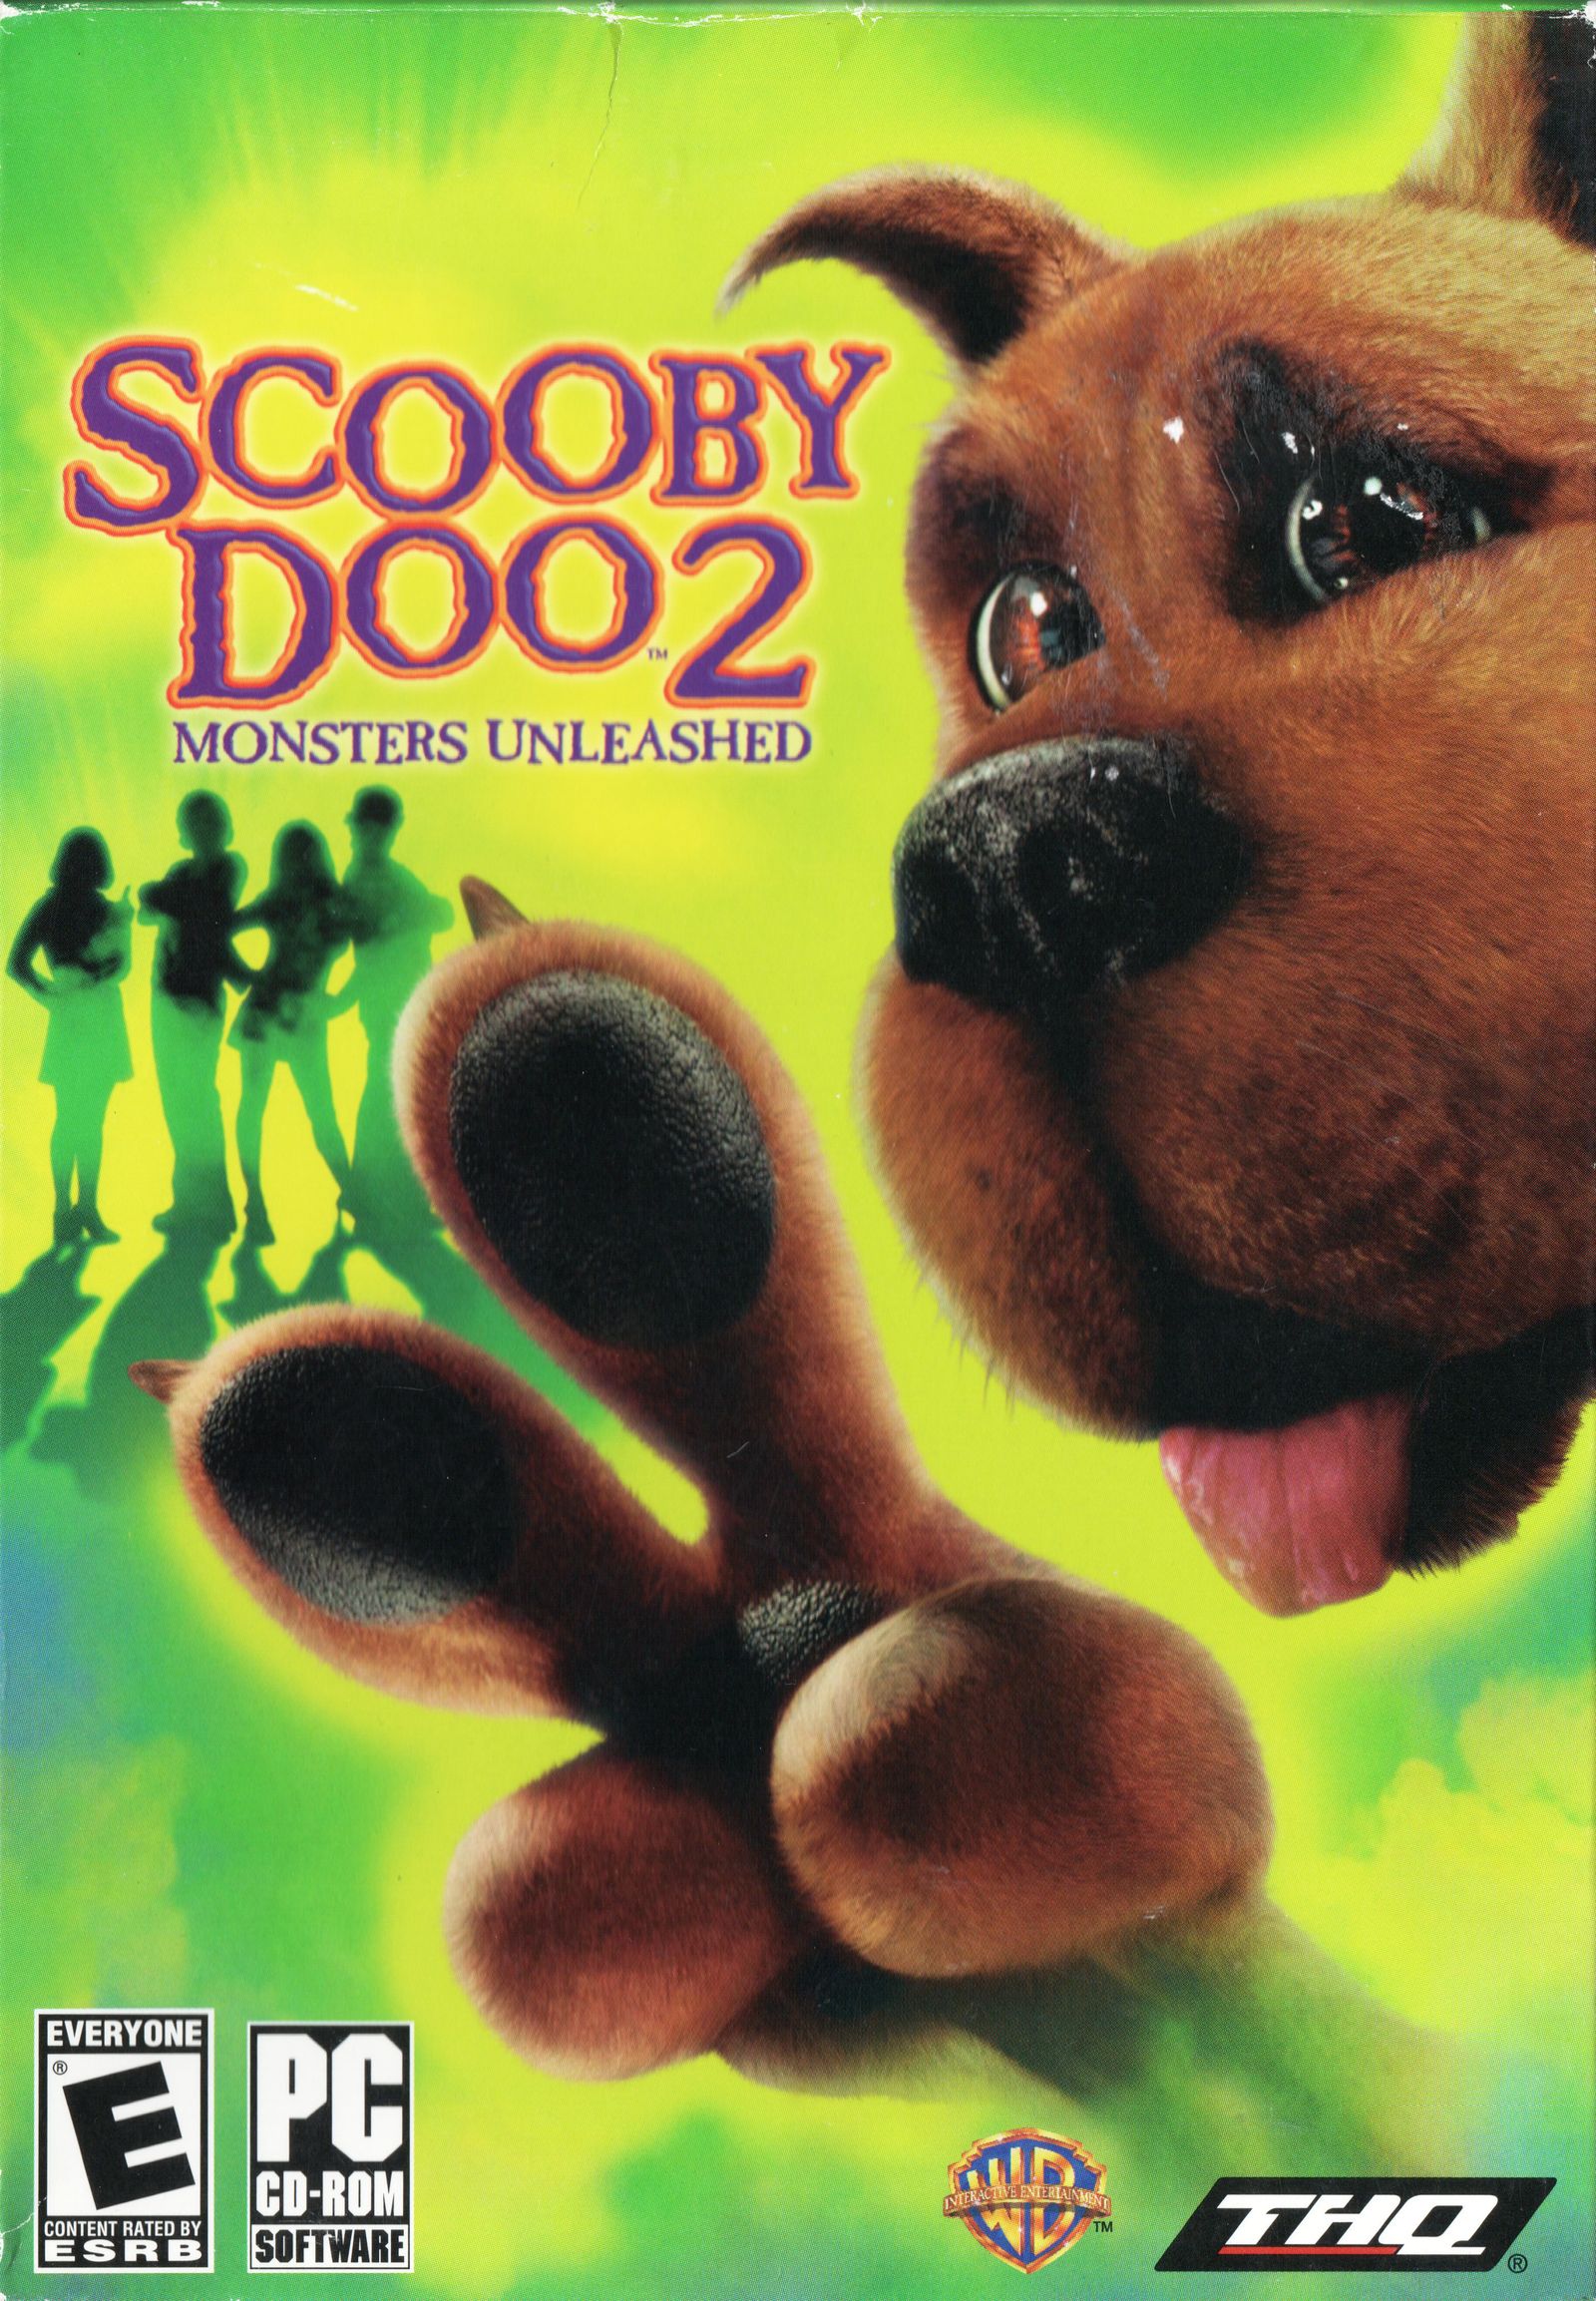 Scooby doo игра. Game boy Advance Scooby Doo русская версия. Scooby Doo 2 Monsters unleashed игра. Игра Скуби Ду монстры на свободе. Скуби-Ду 2 монстры на свободе игра.